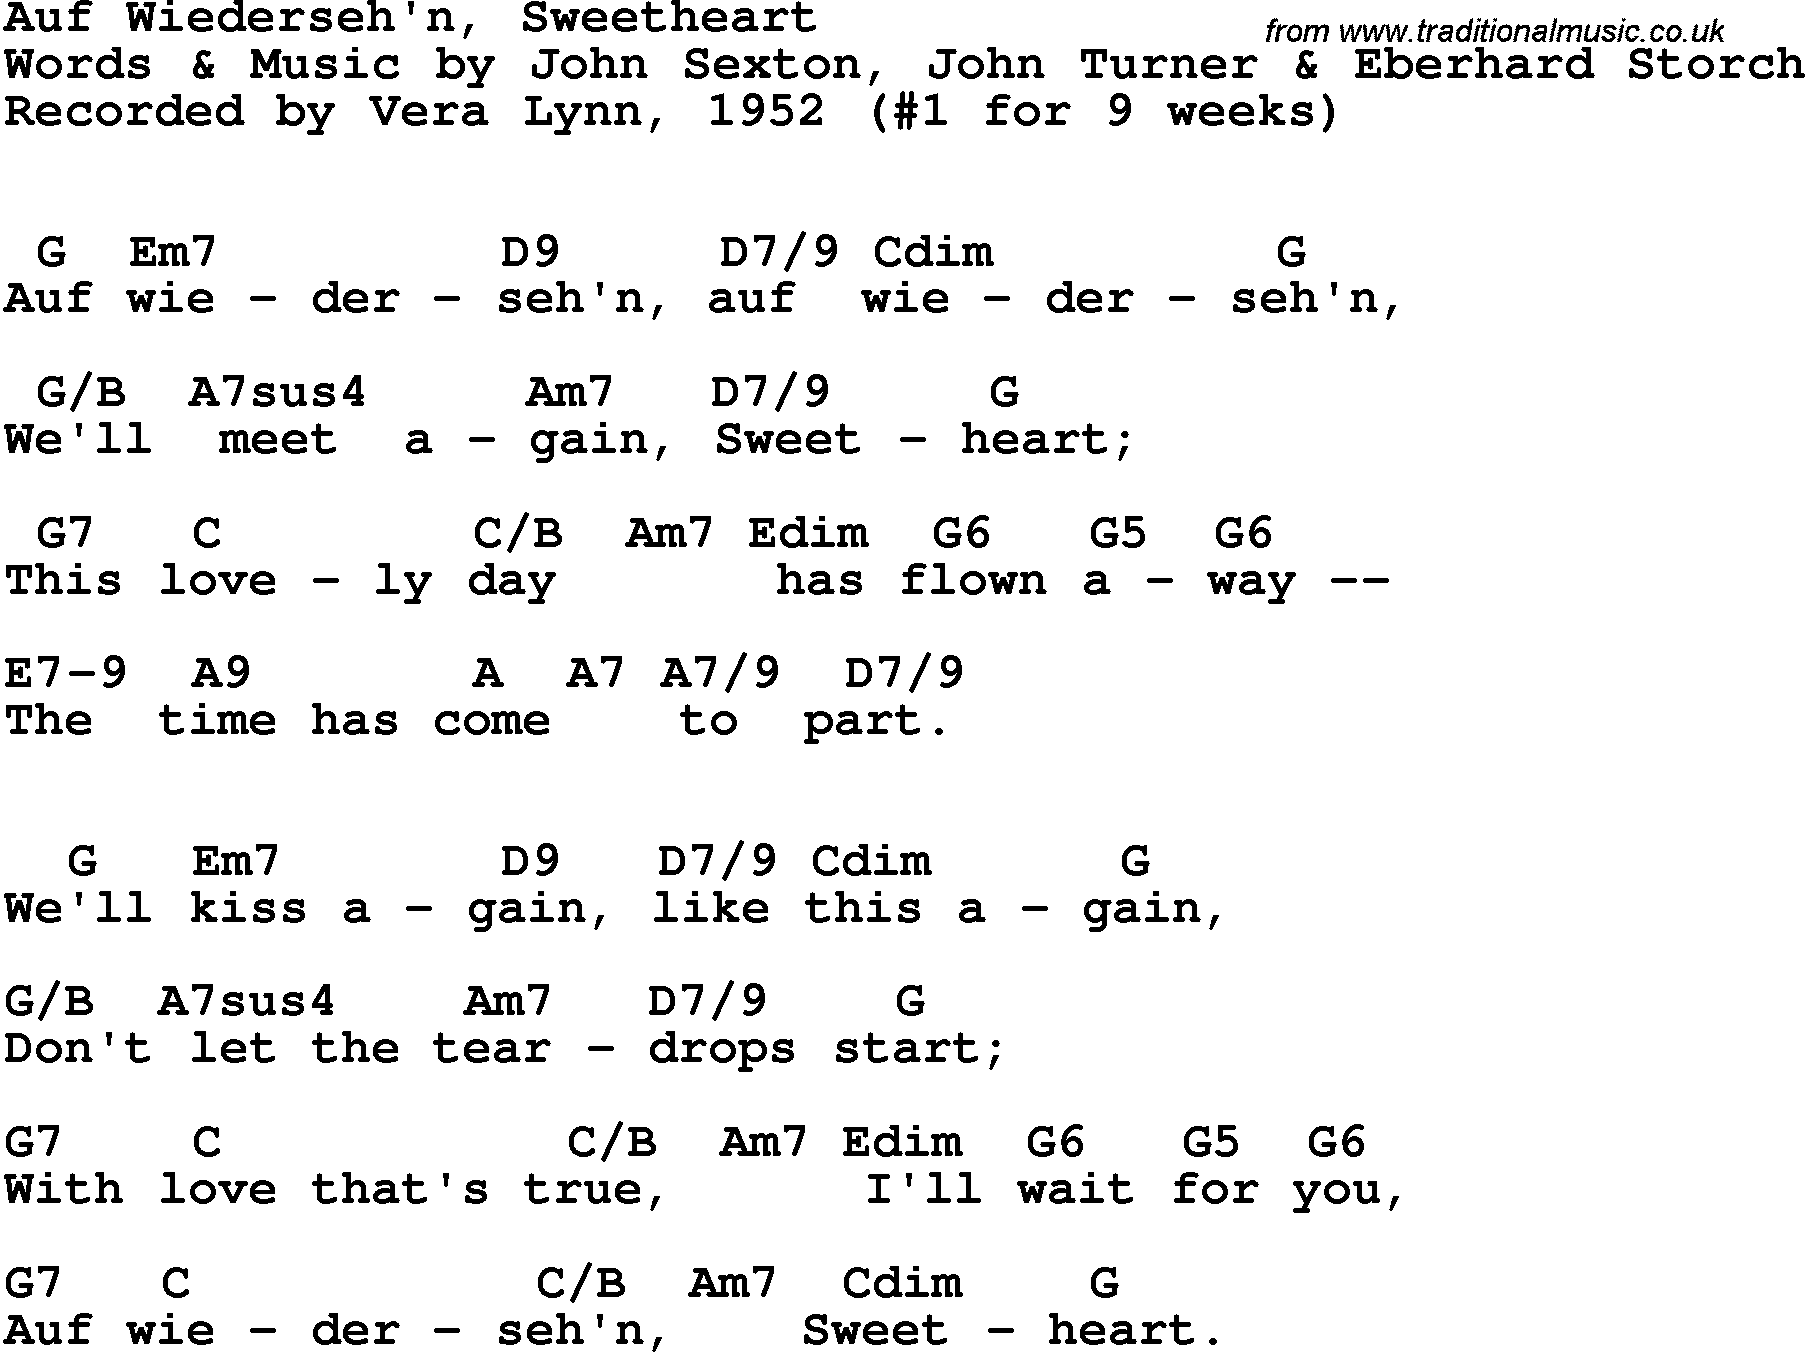 Song Lyrics with guitar chords for Aufweider Seh'n Sweetheart - Vera Lynn, 1952